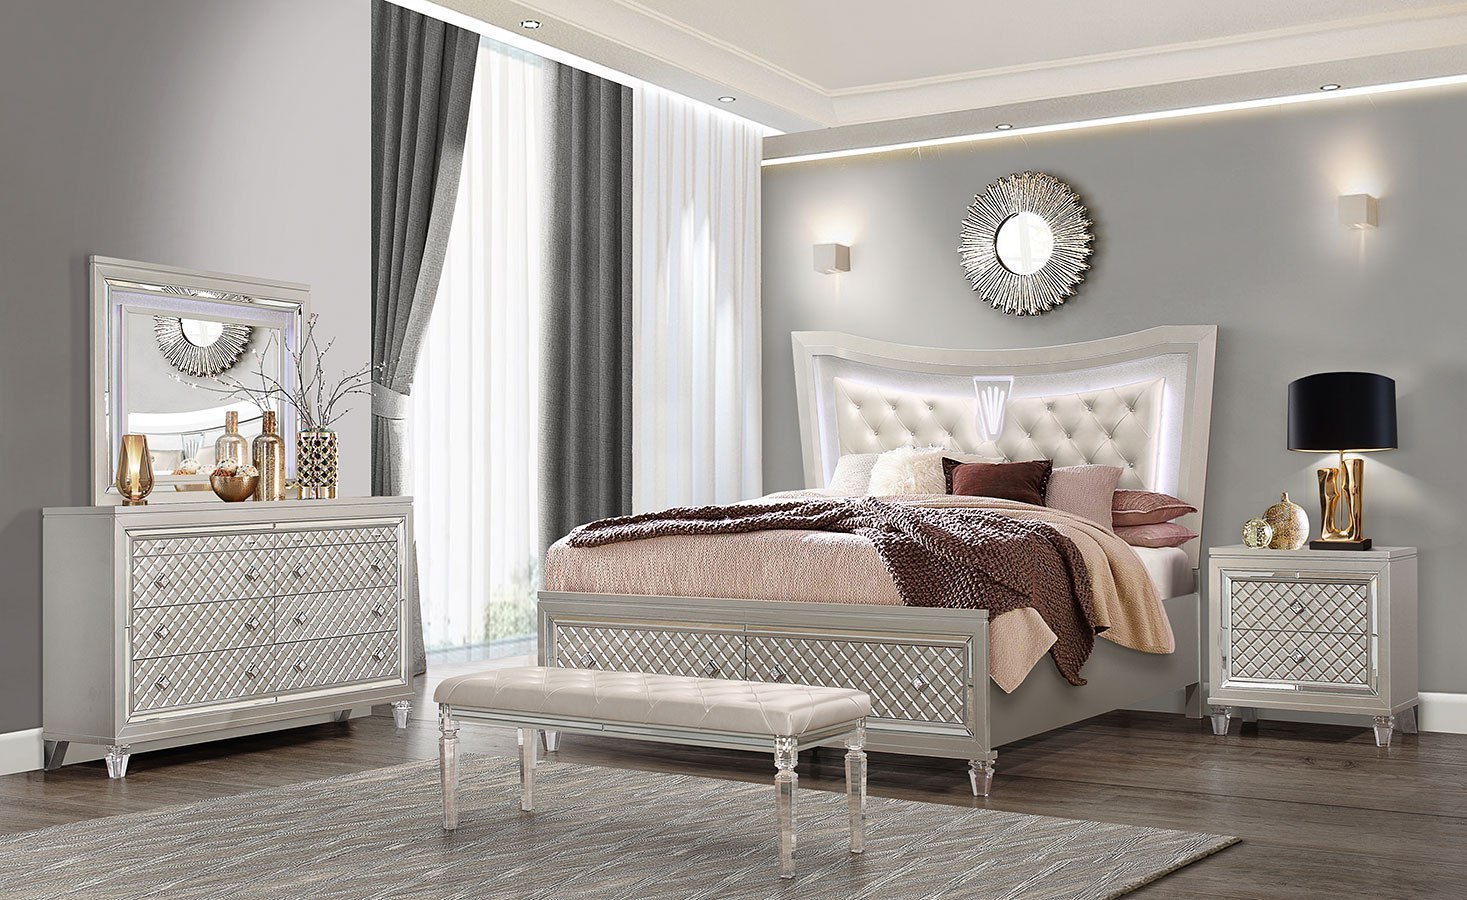 paris bedroom furniture collection